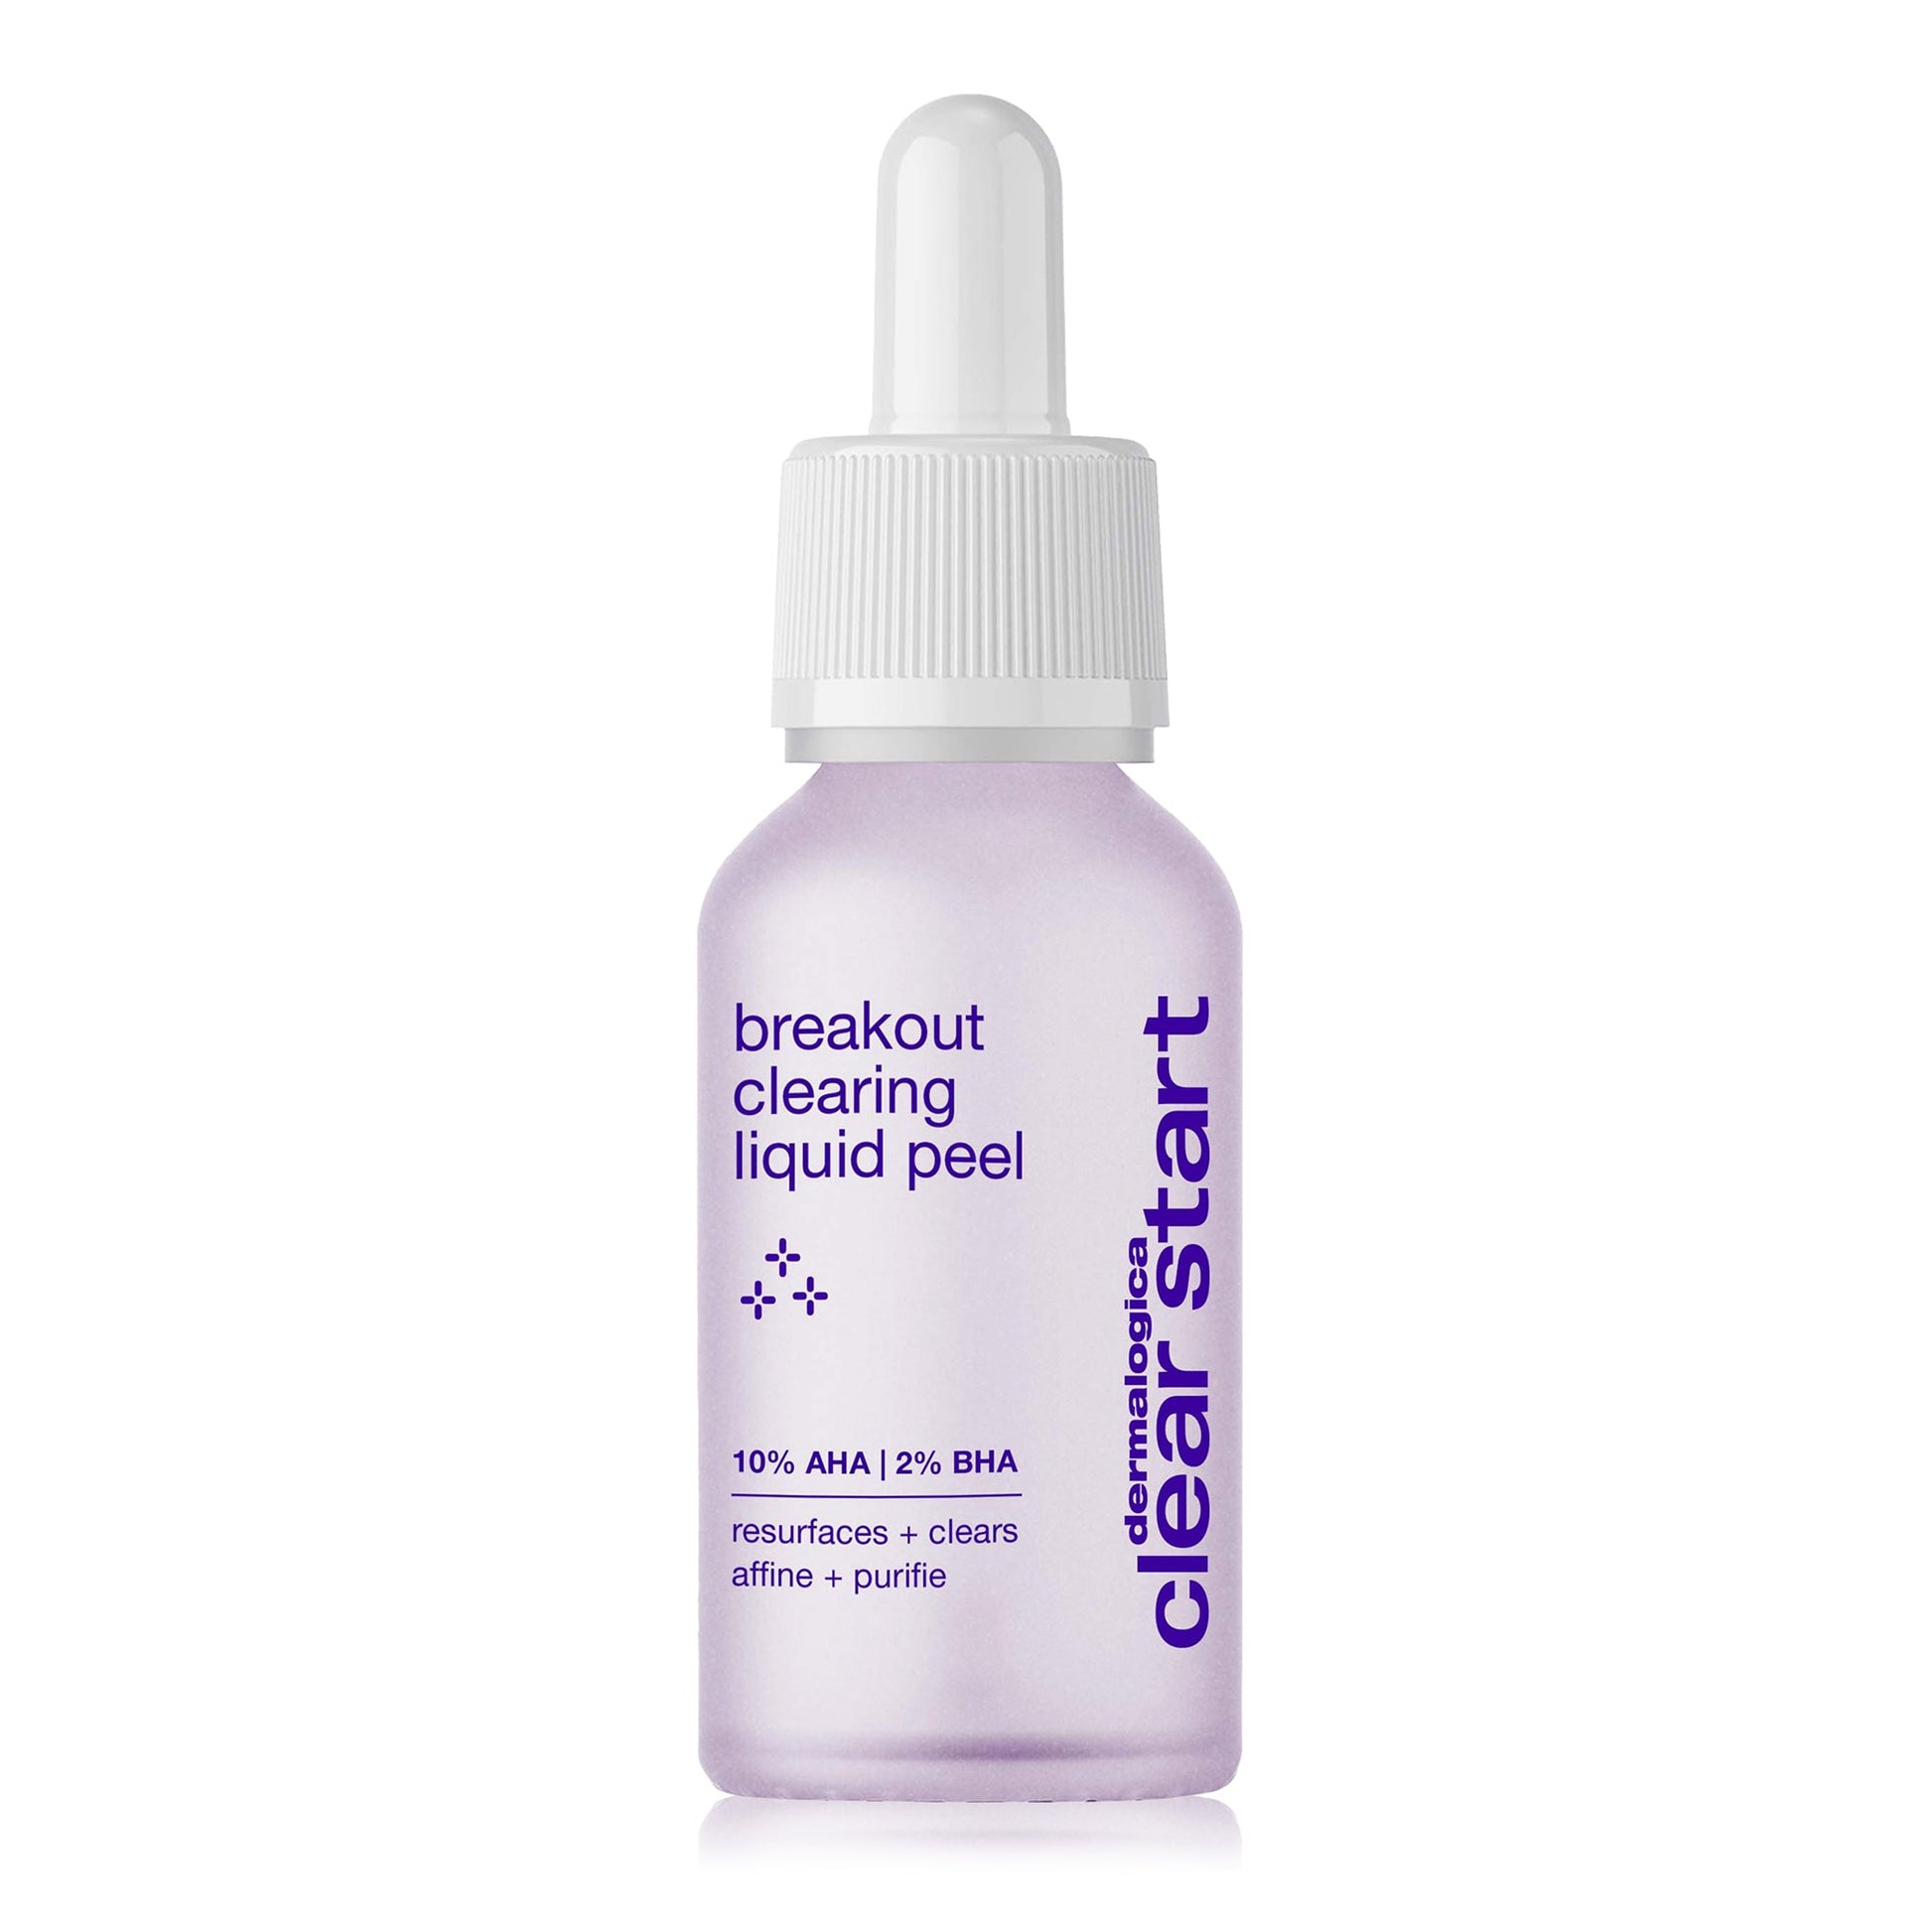 Breakout Clearing Liquid Peel